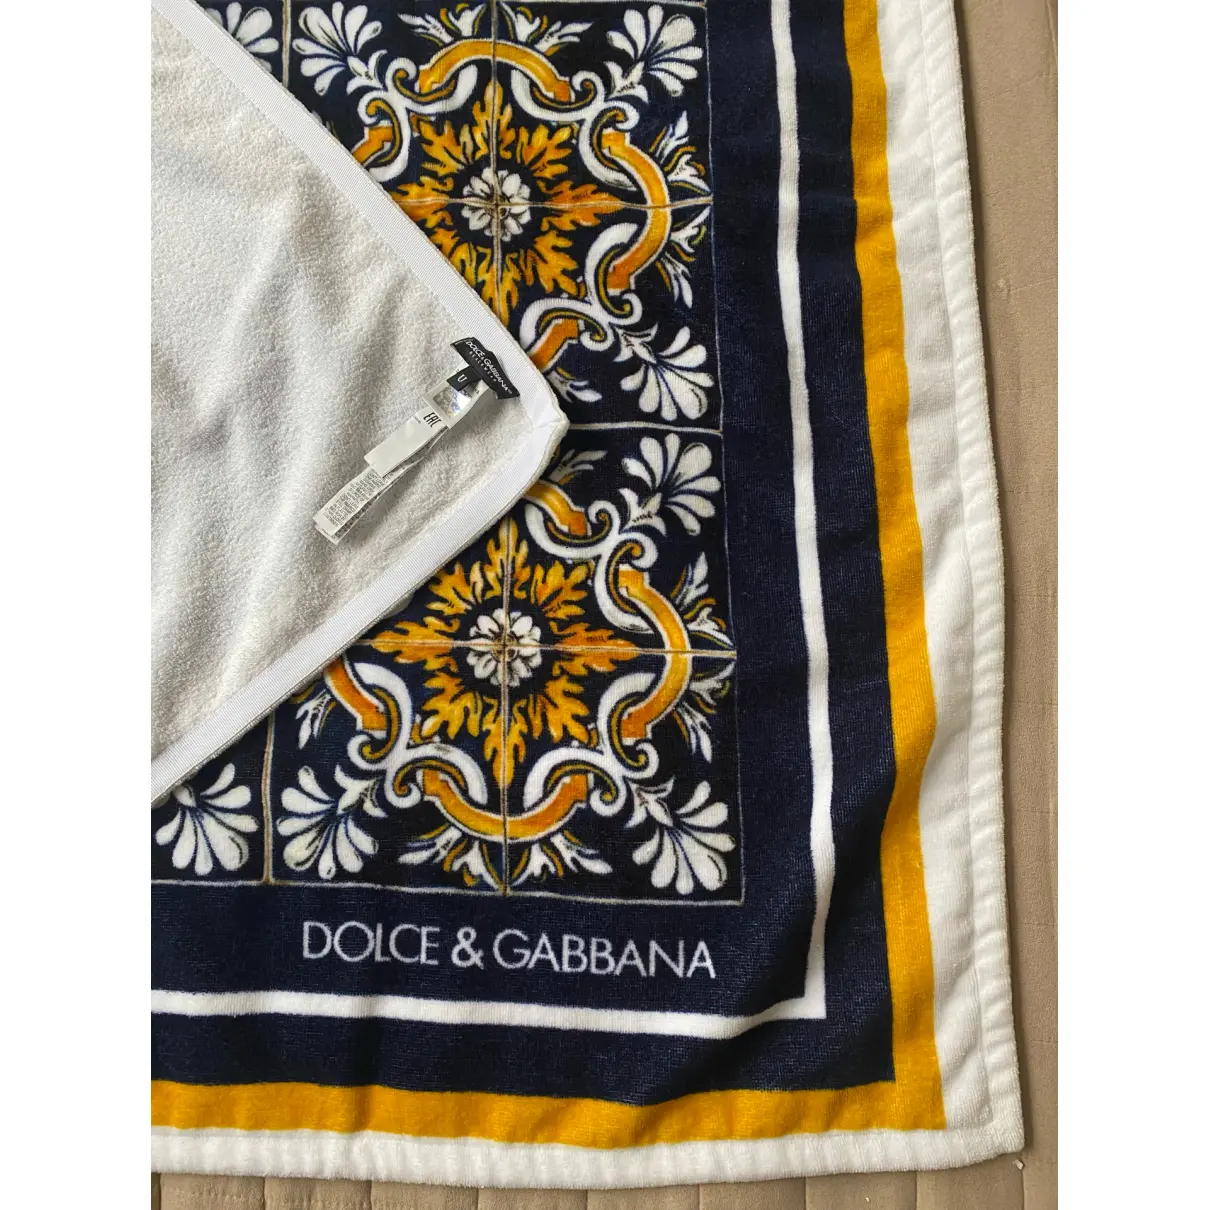 Buy Dolce & Gabbana Textiles online